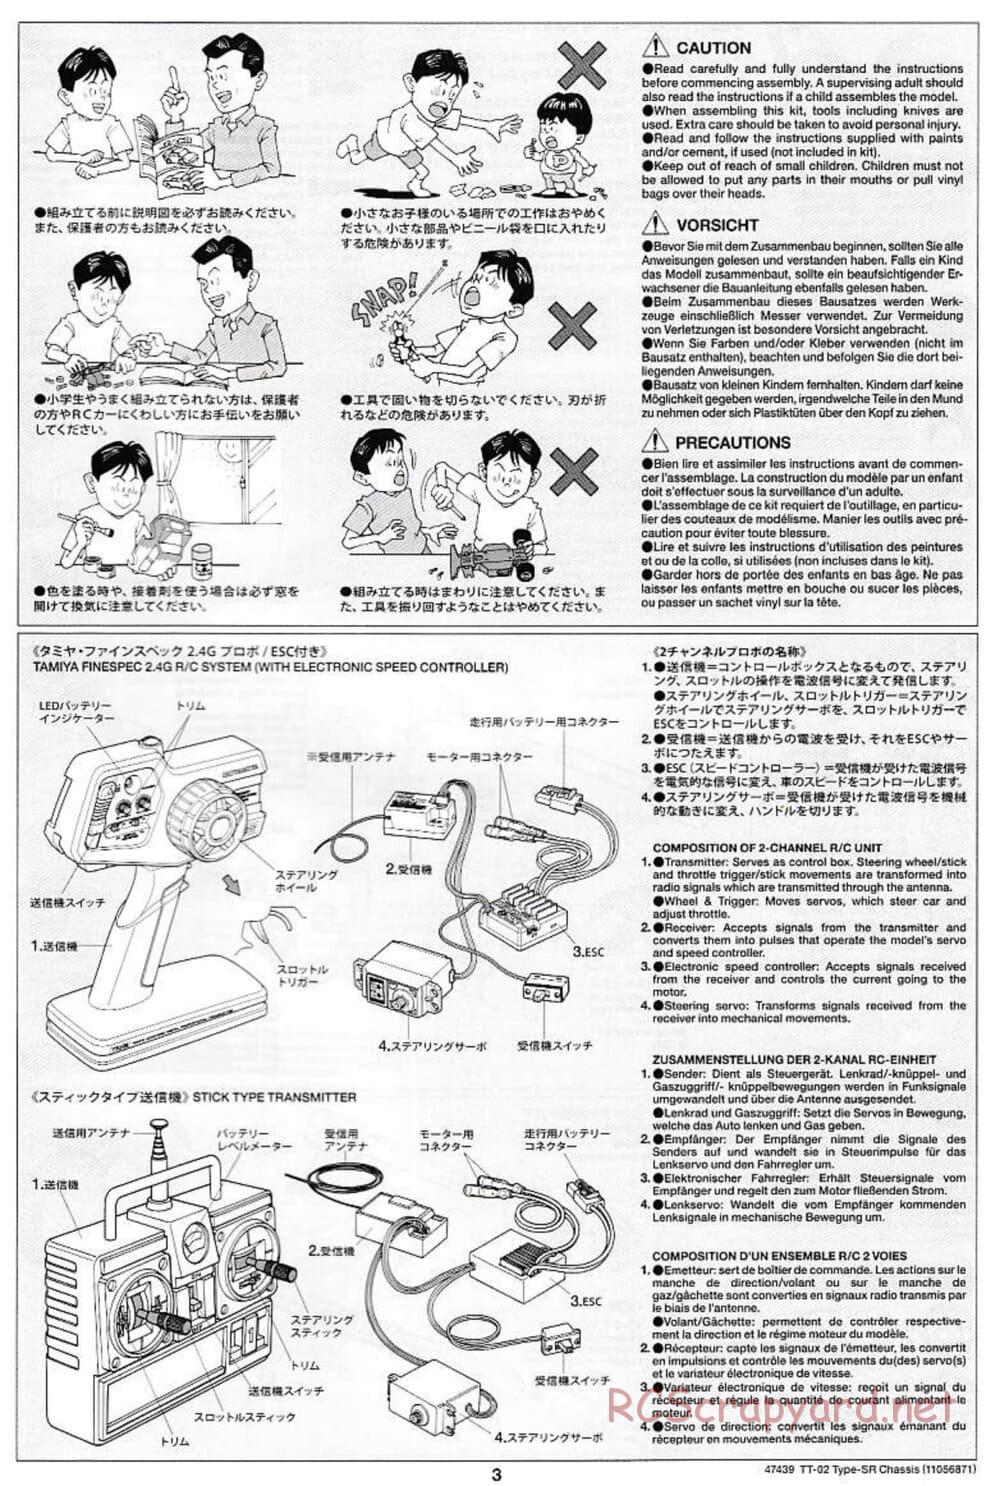 Tamiya - TT-02 Type-SR Chassis - Manual - Page 3